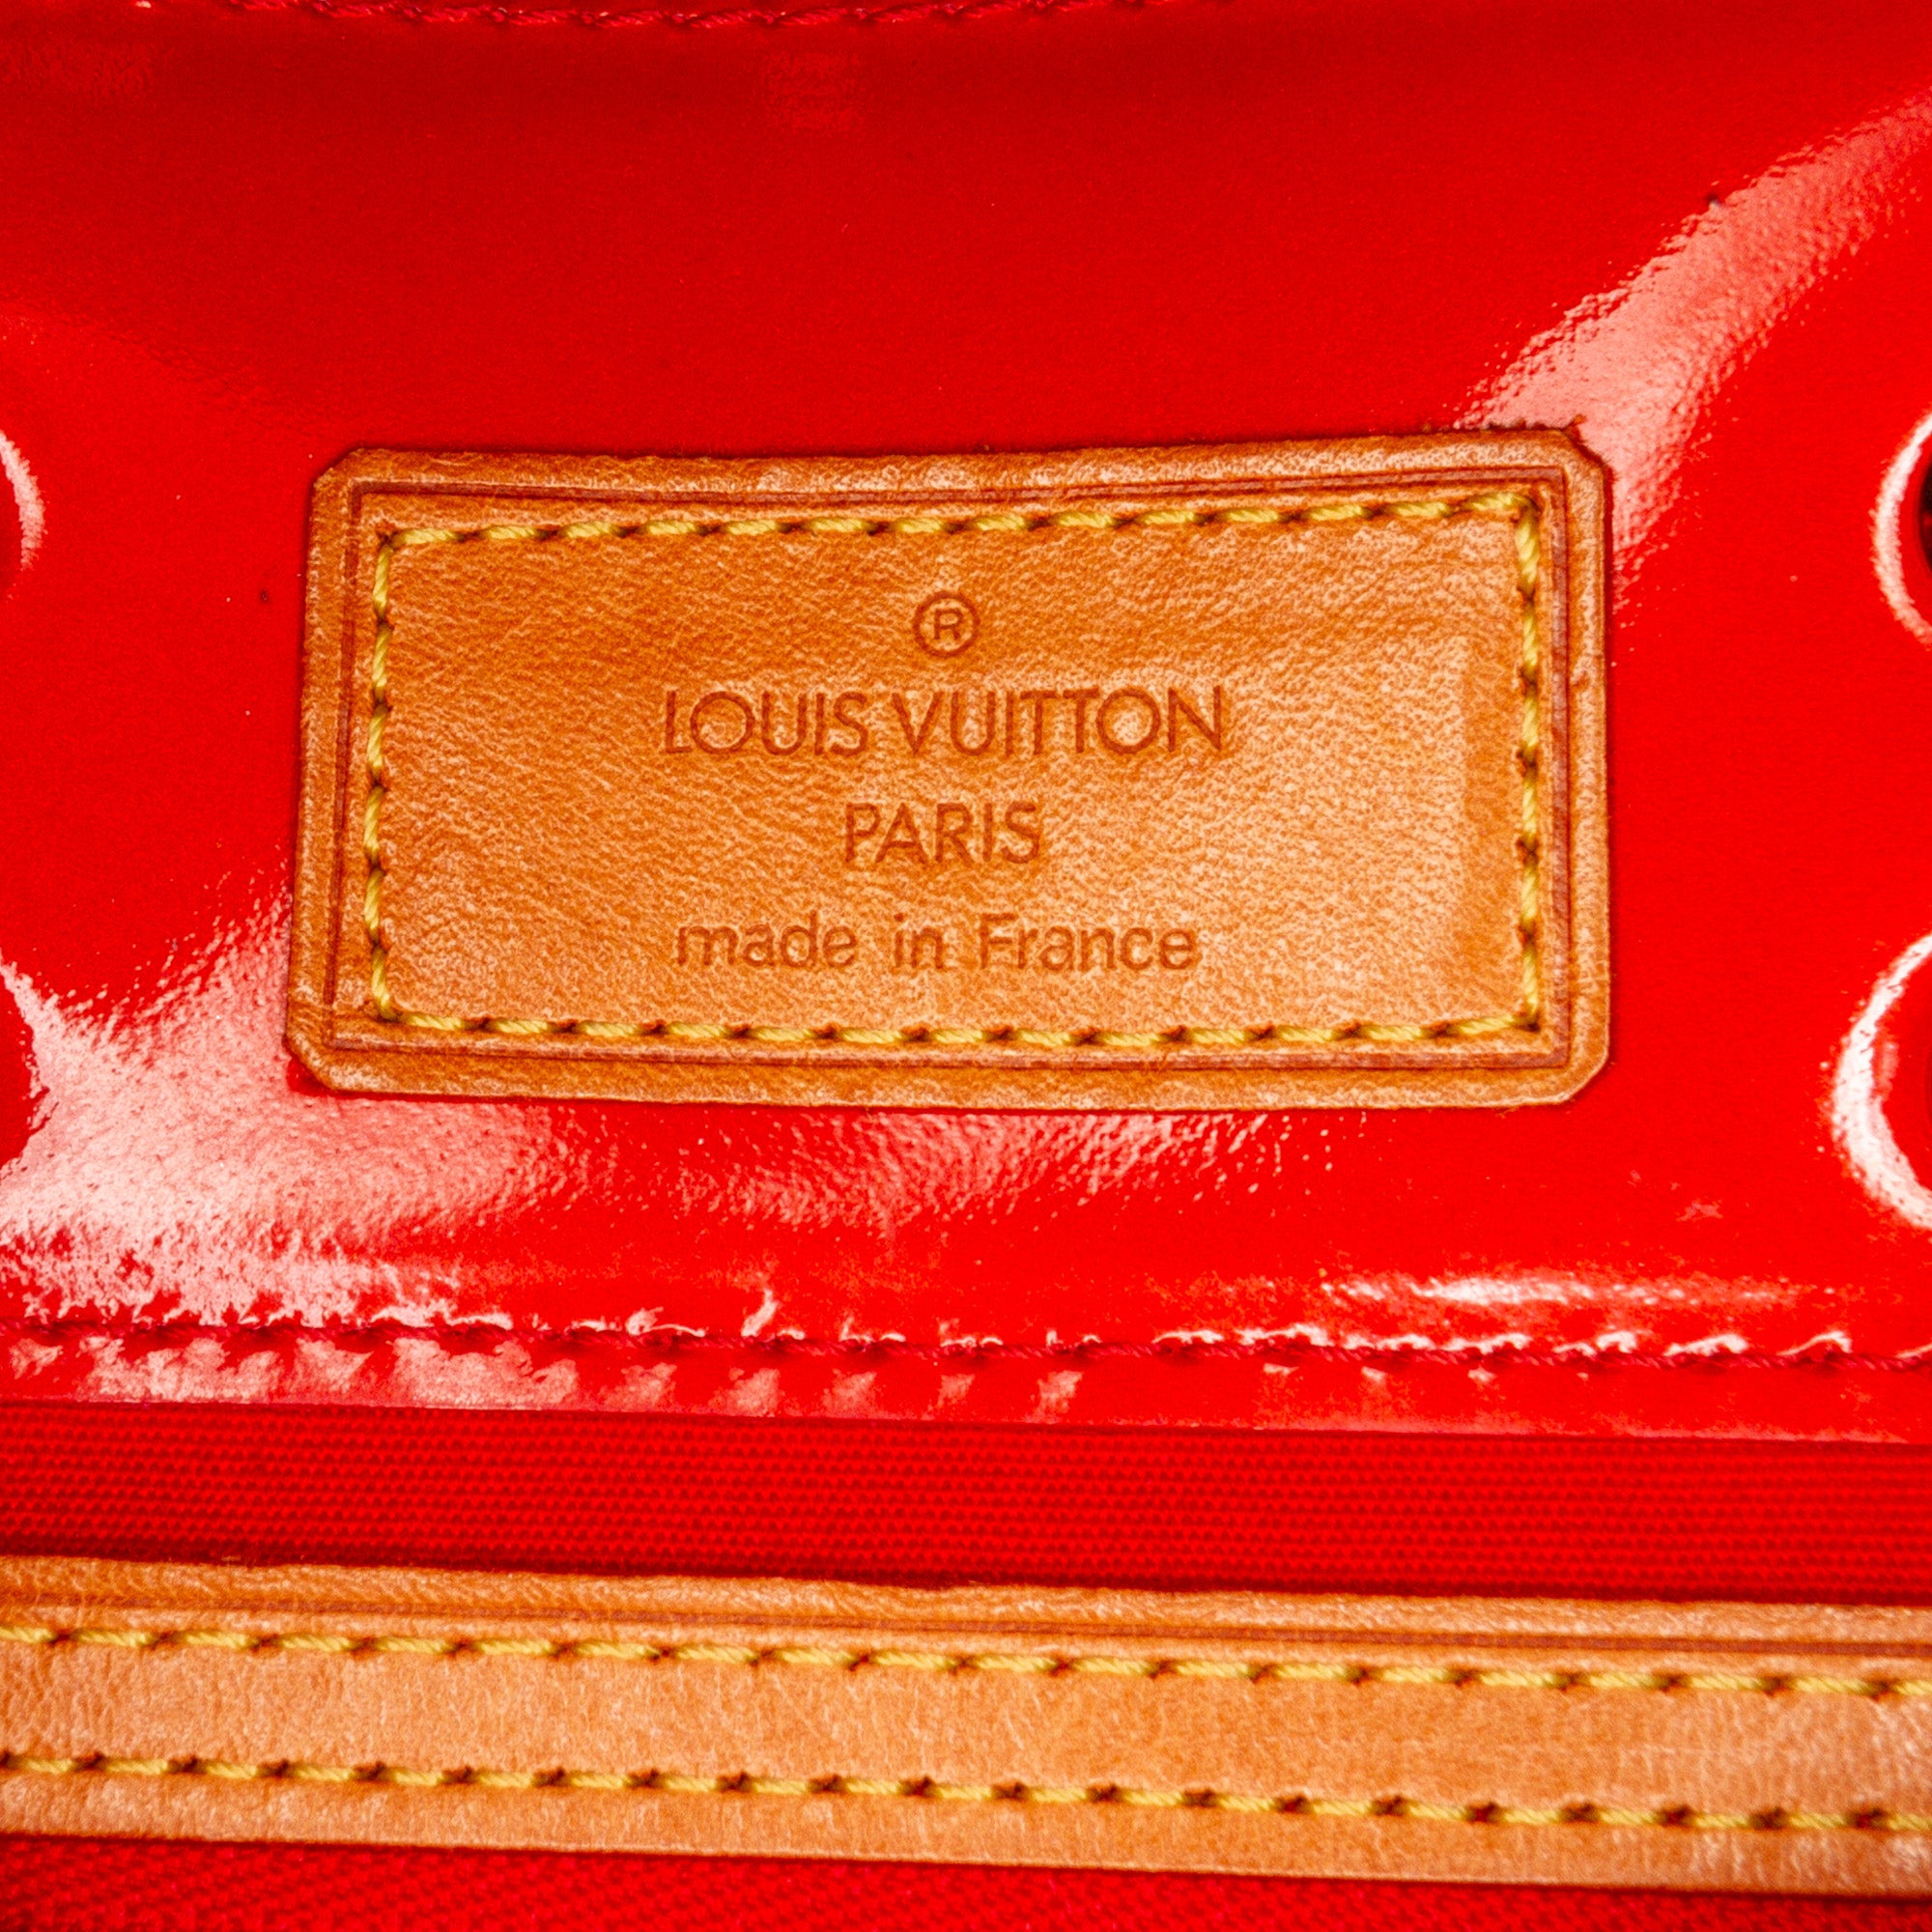 RvceShops Revival, Red Louis Vuitton Monogram Vernis Reade PM Handbag